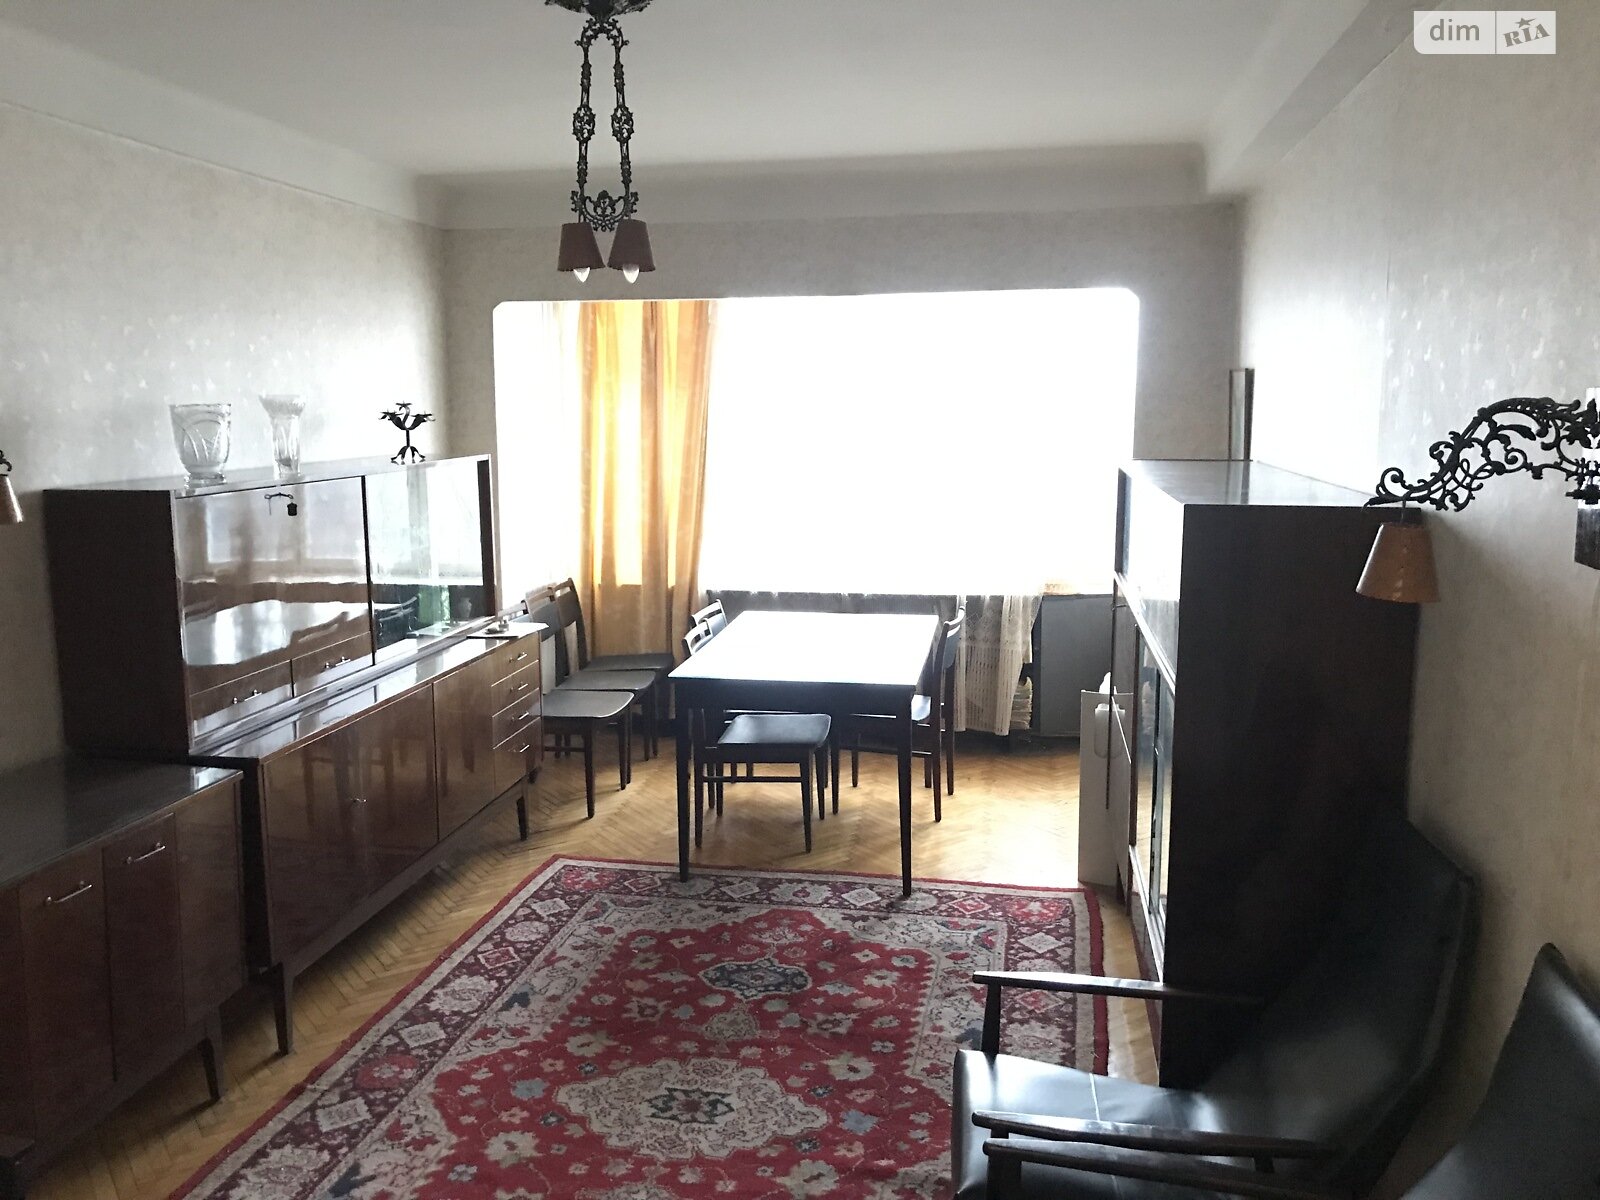 Продажа трехкомнатной квартиры в Киеве, на ул. Ивана Мыколайчука 3, район Березняки фото 1